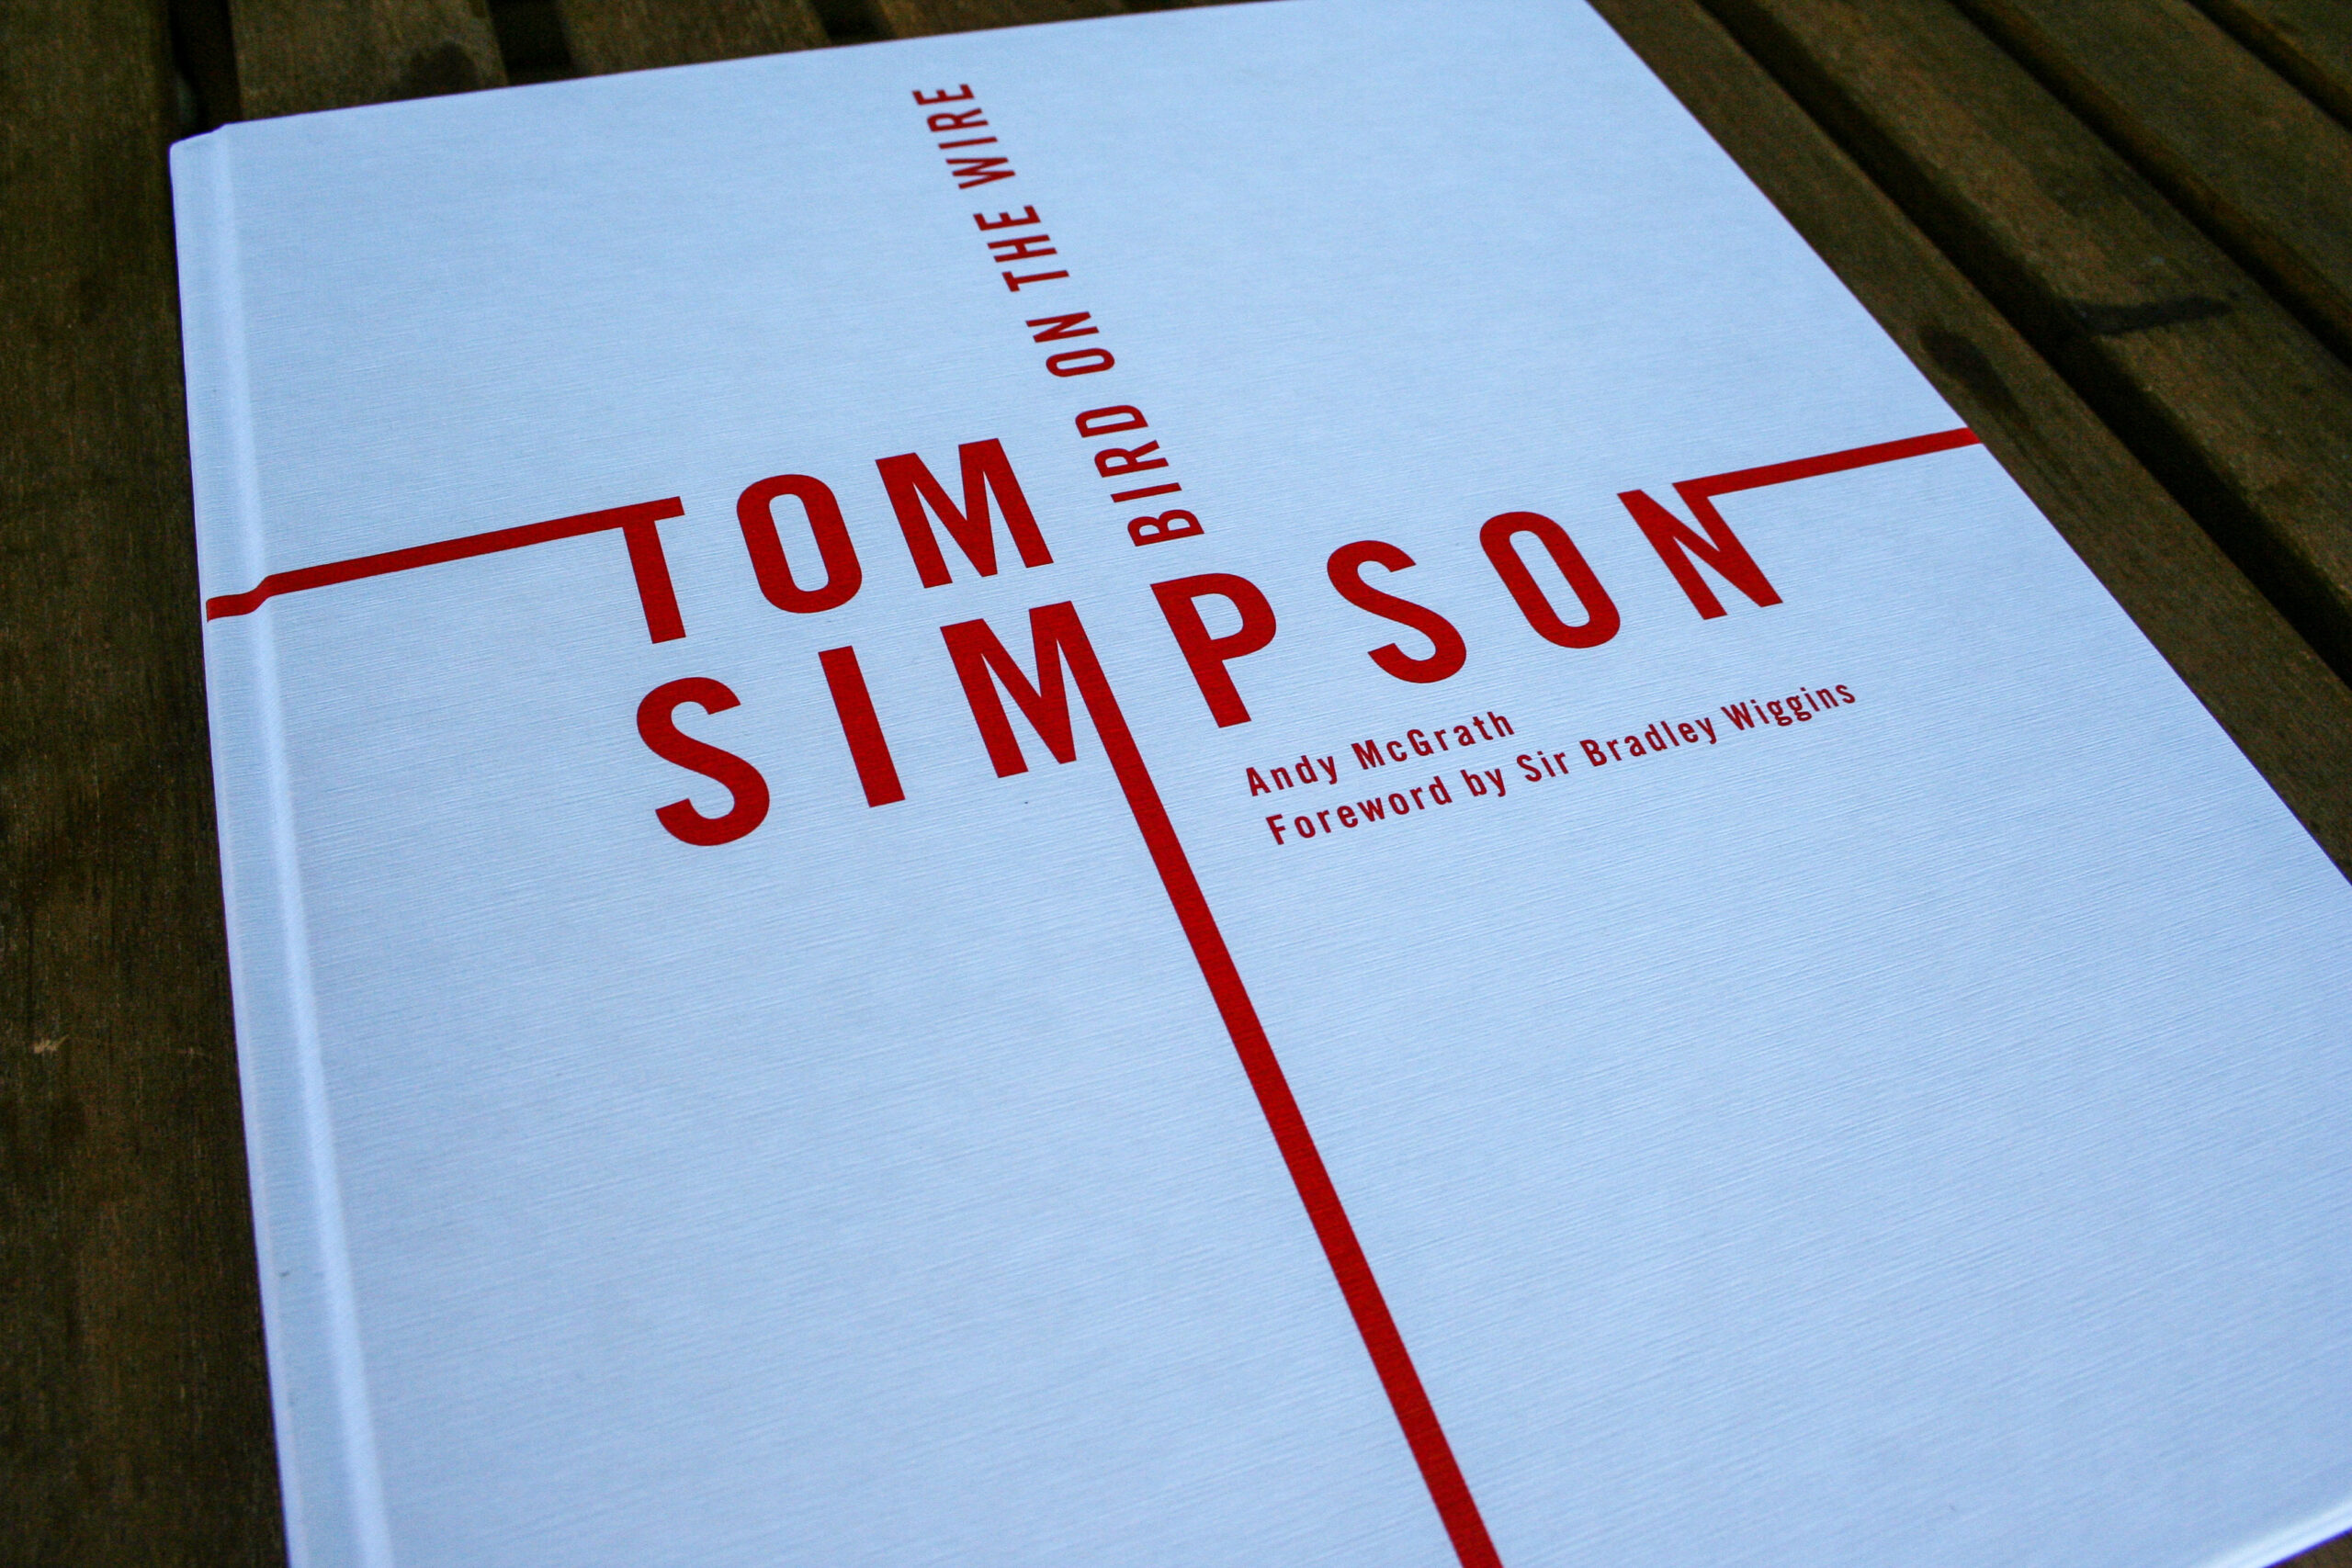 Recenzja: “Tom Simpson : Bird on the Wire”